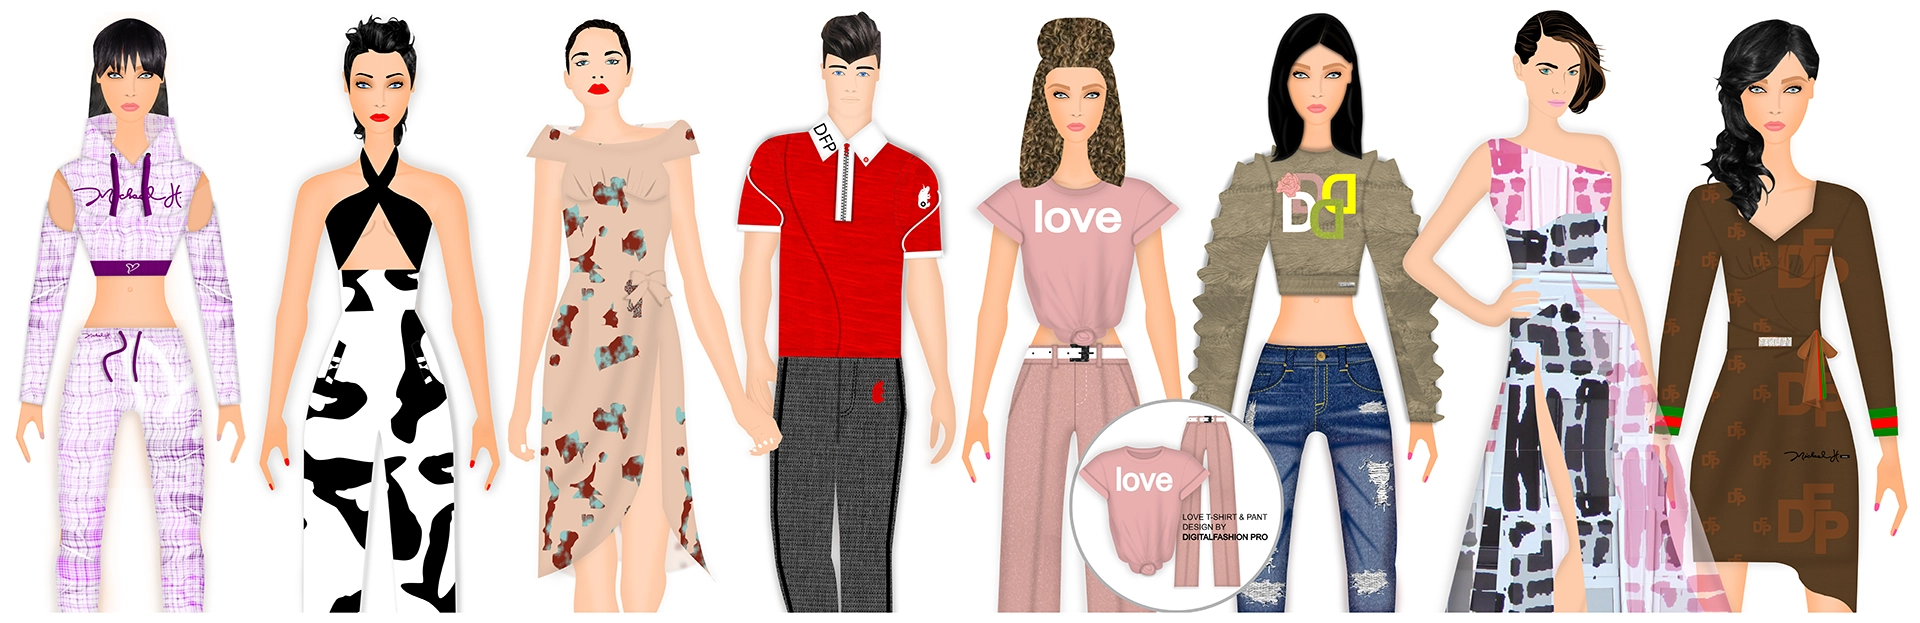 Fashion Design Software - digital fashion pro - fashion sketch models - design clothing